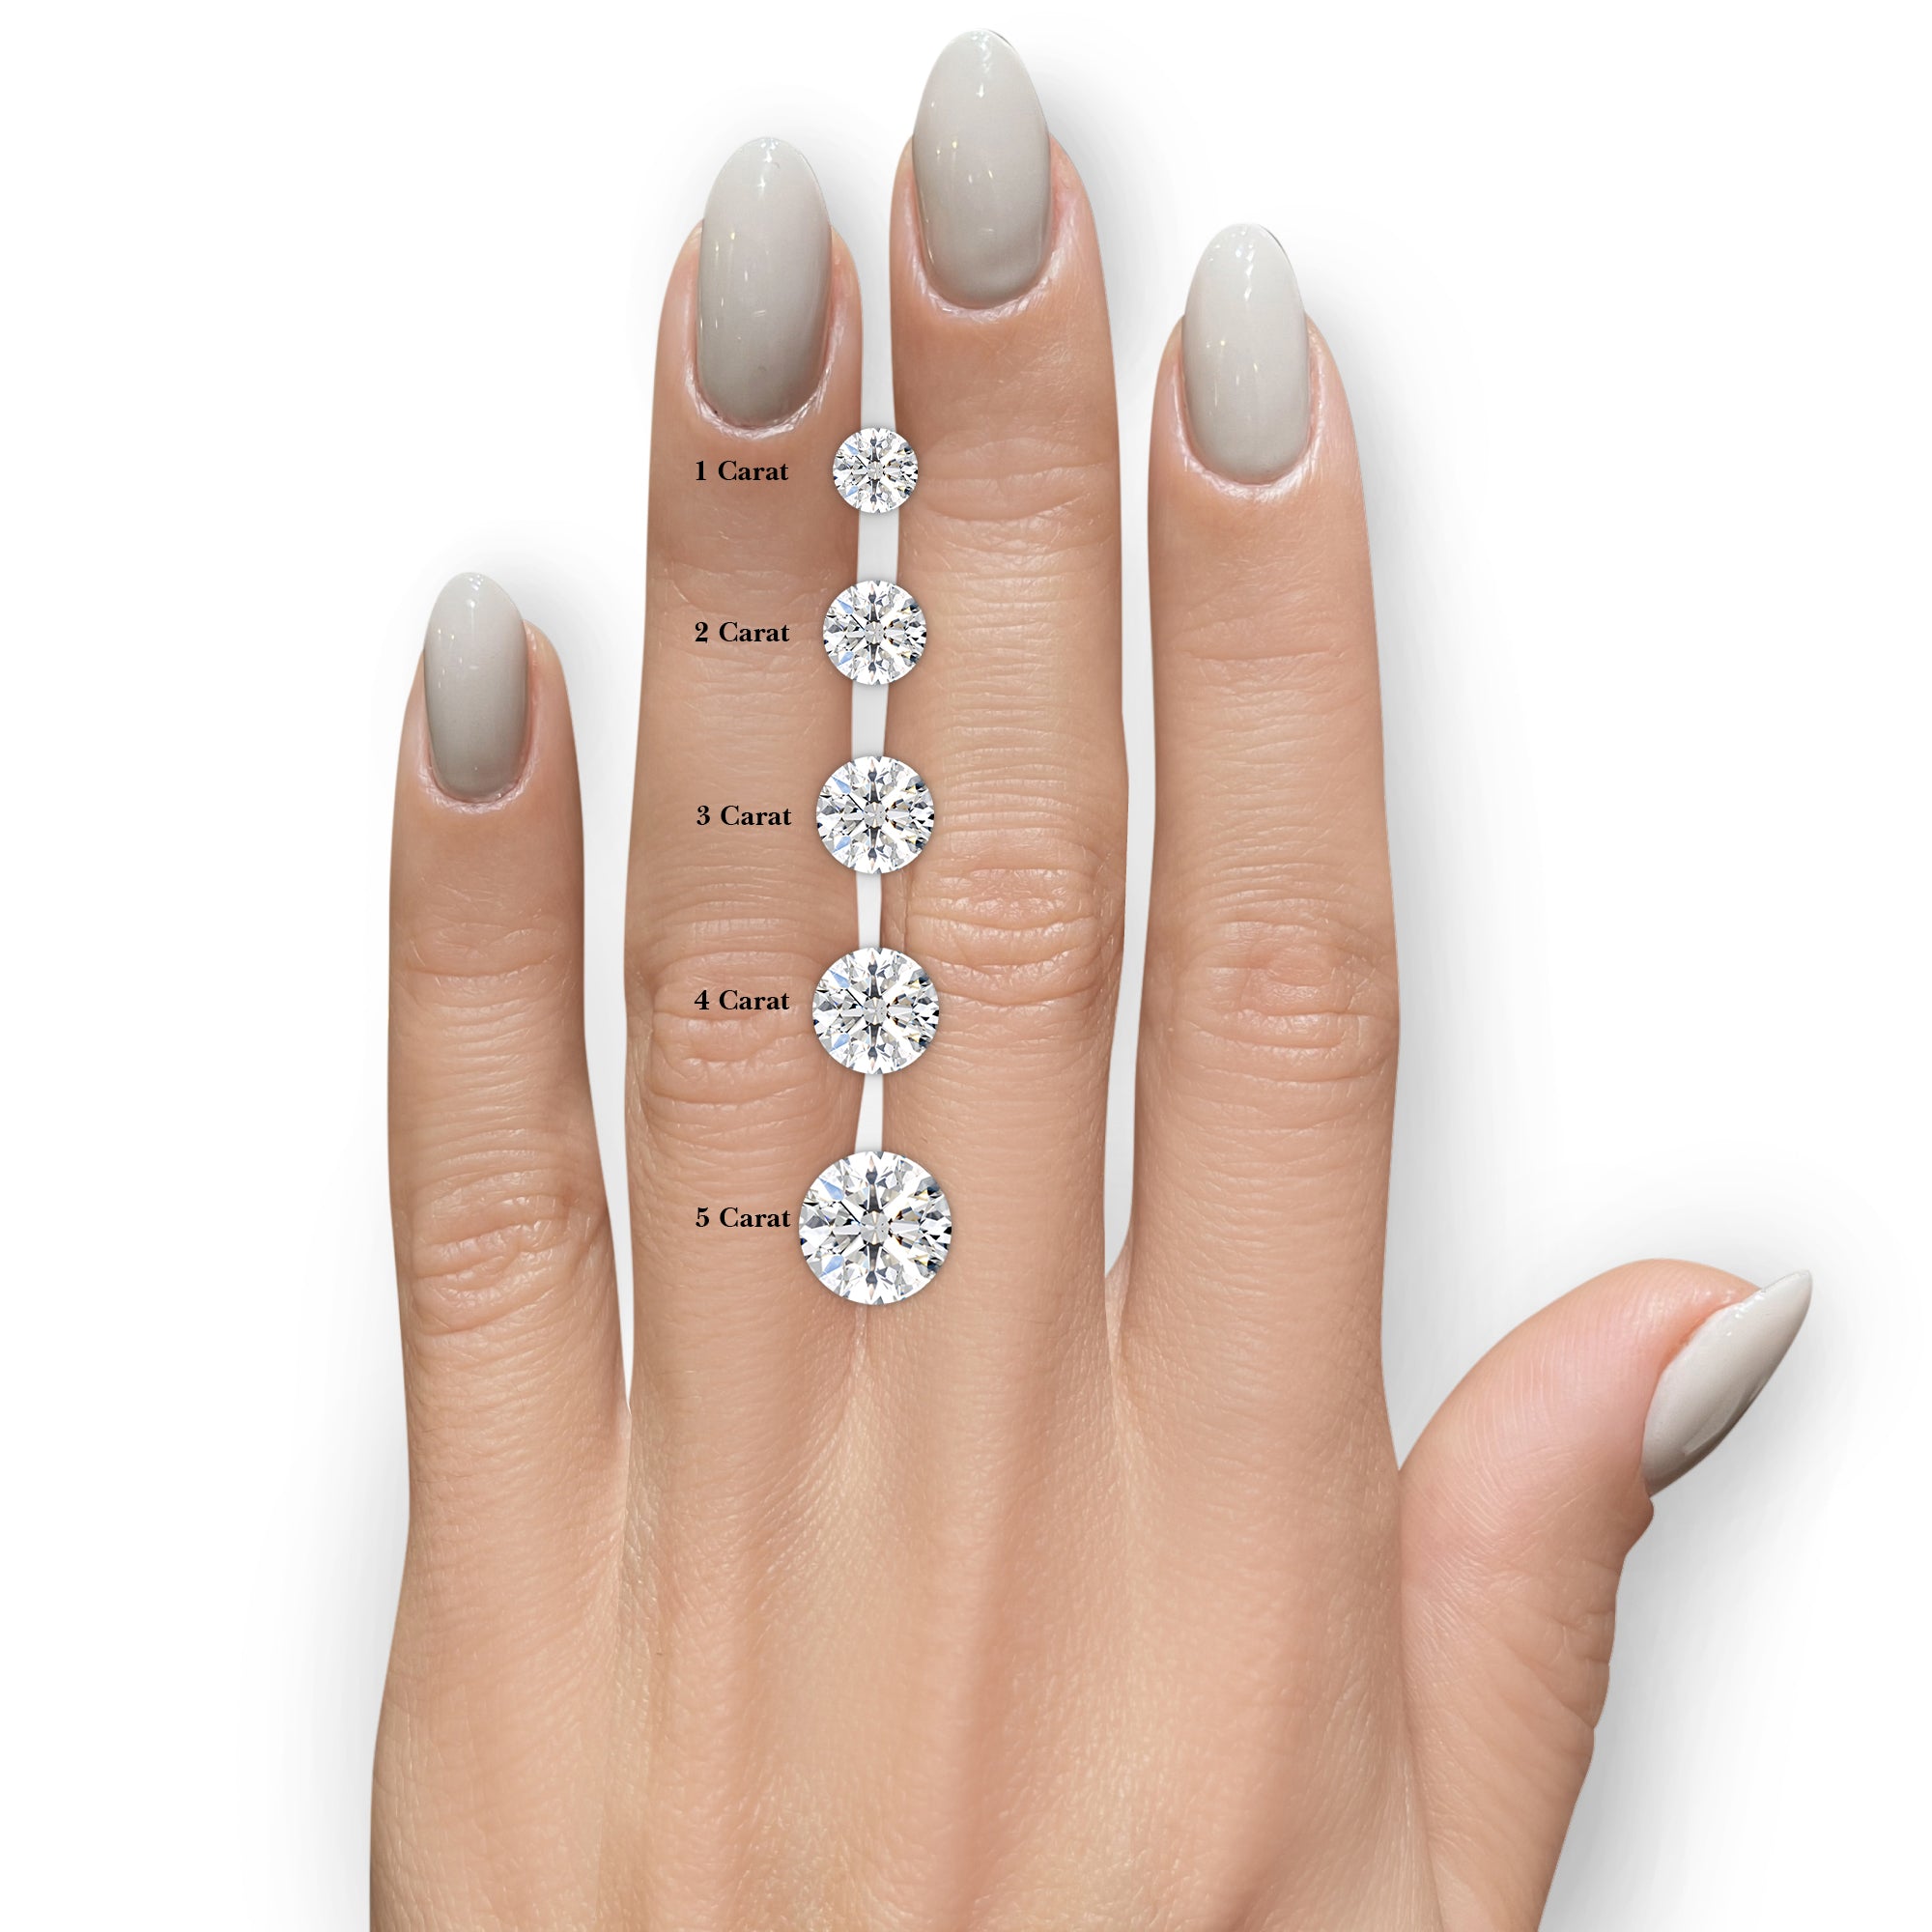 Talia Diamond Engagement Ring   (1.2 Carat) - 14K White Gold